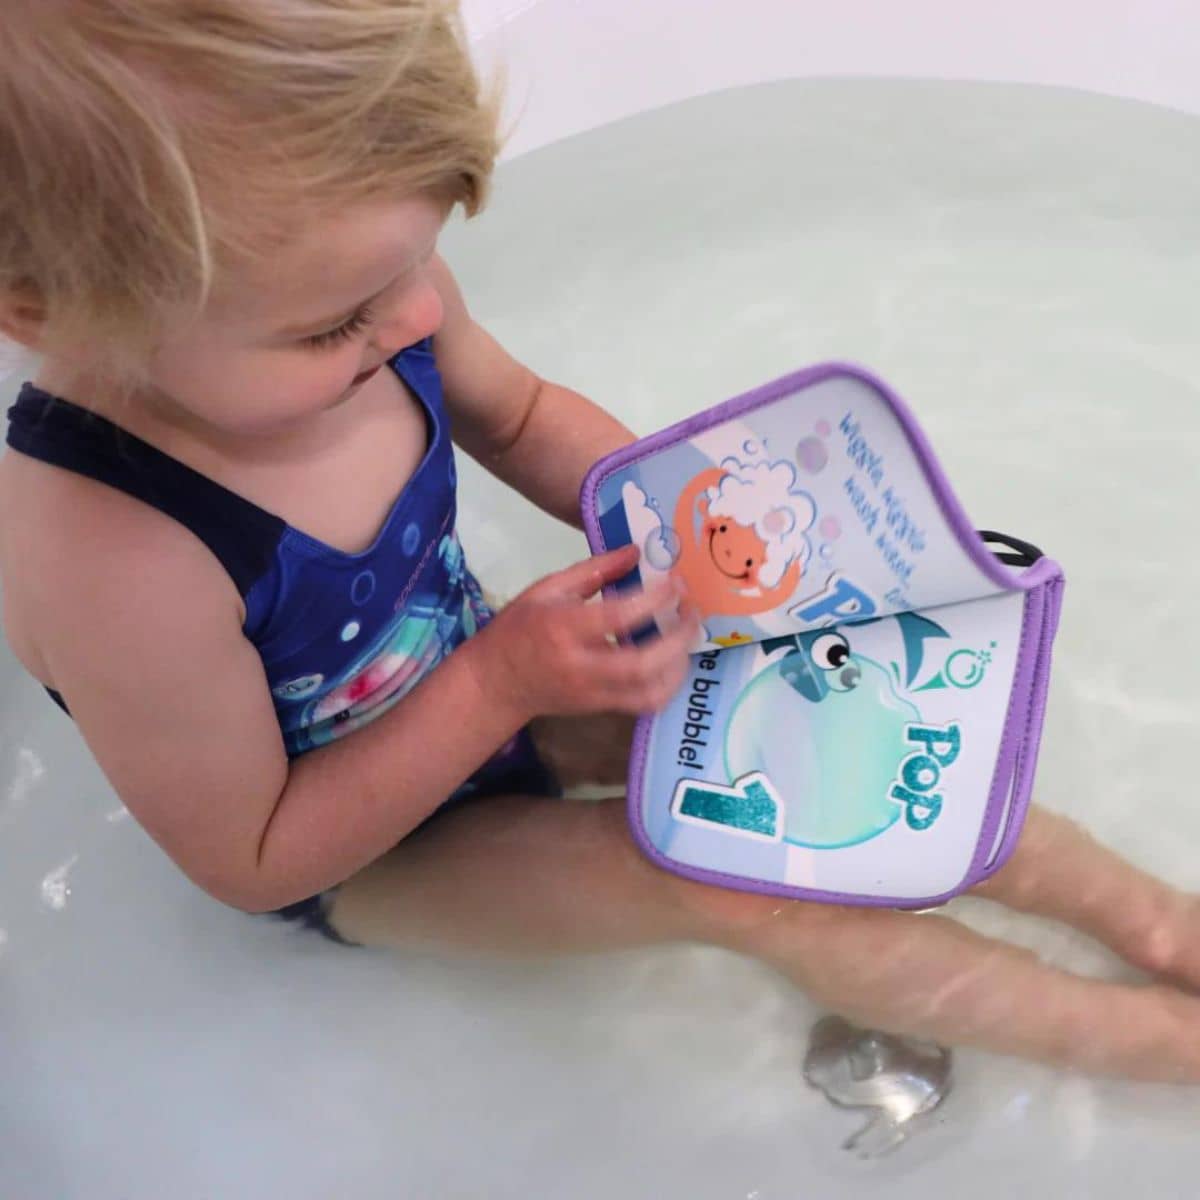 Jellystone Designs Baby Bath Book